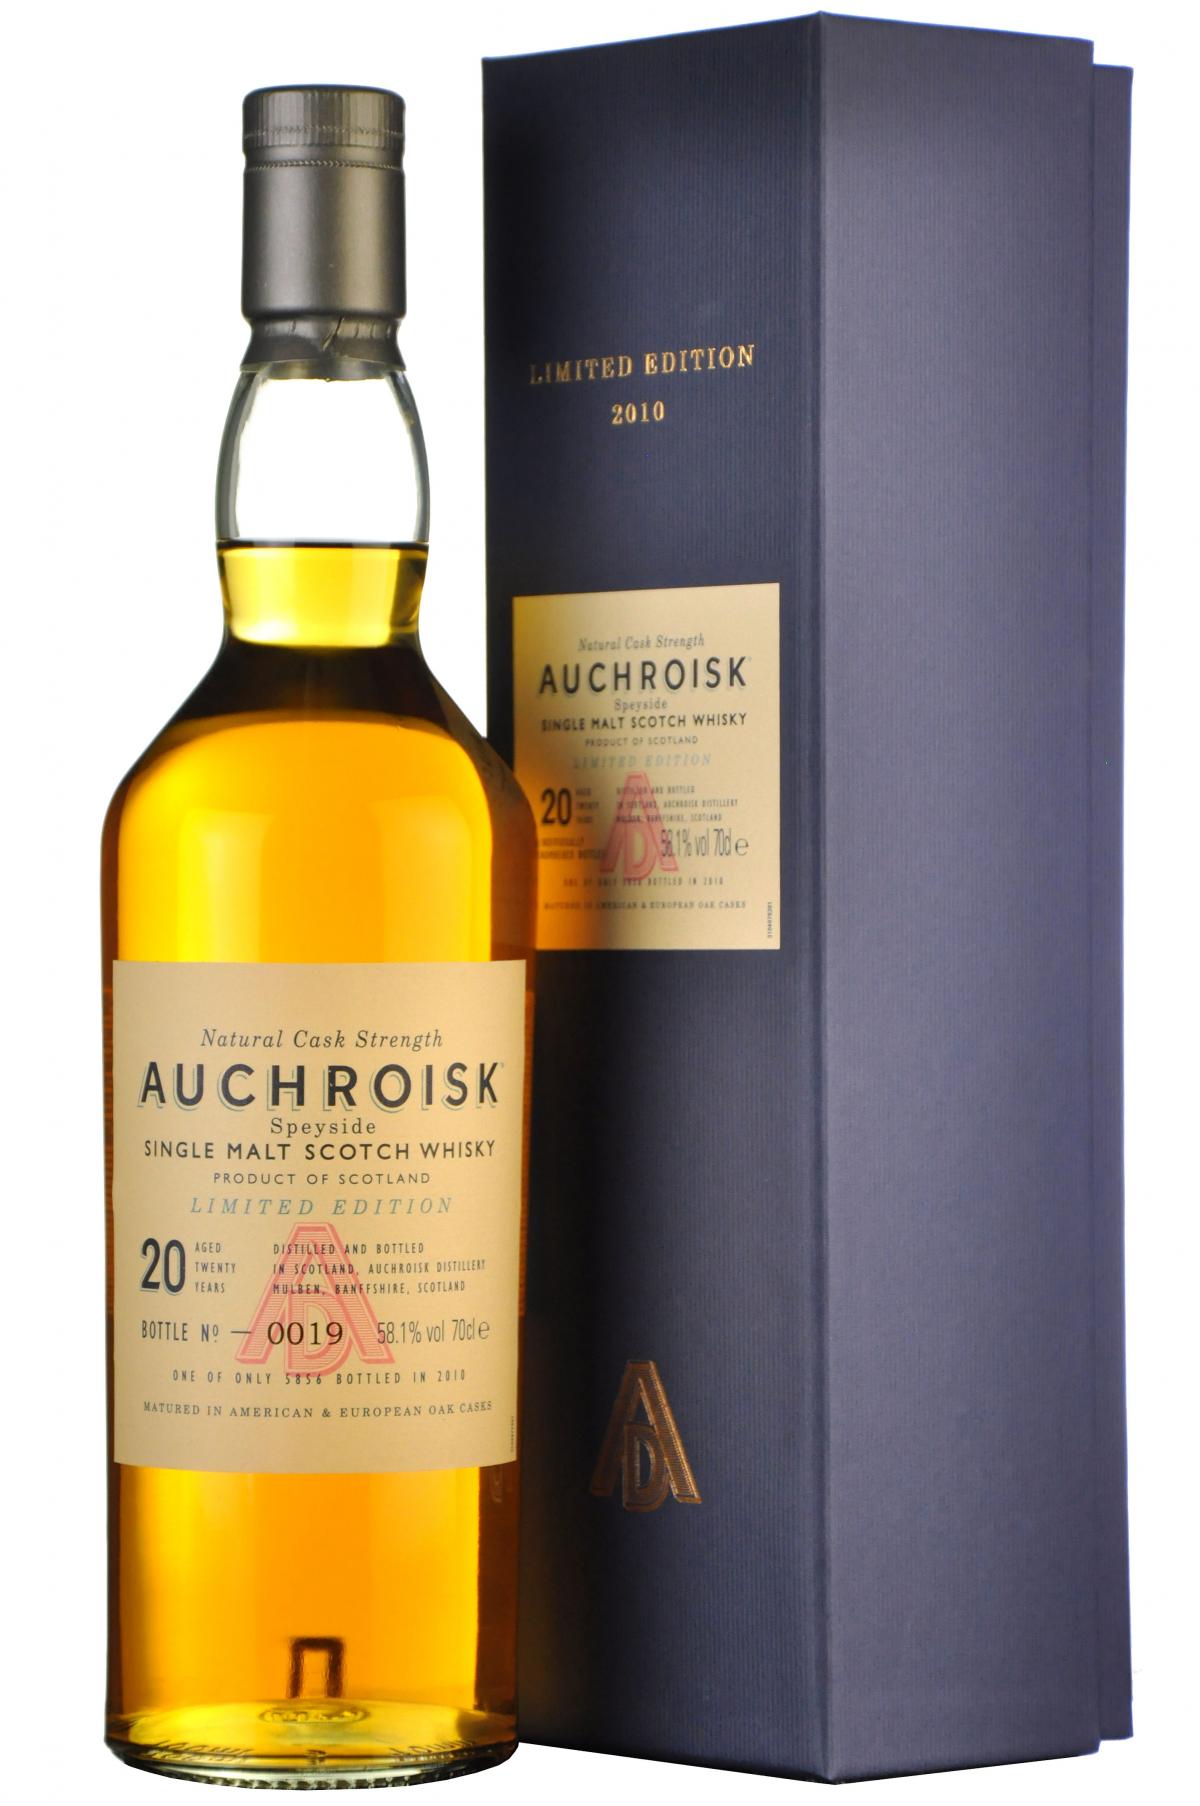 auchroisk 20 year old, 2010 release, speyside single malt scotch, whisky whiskey